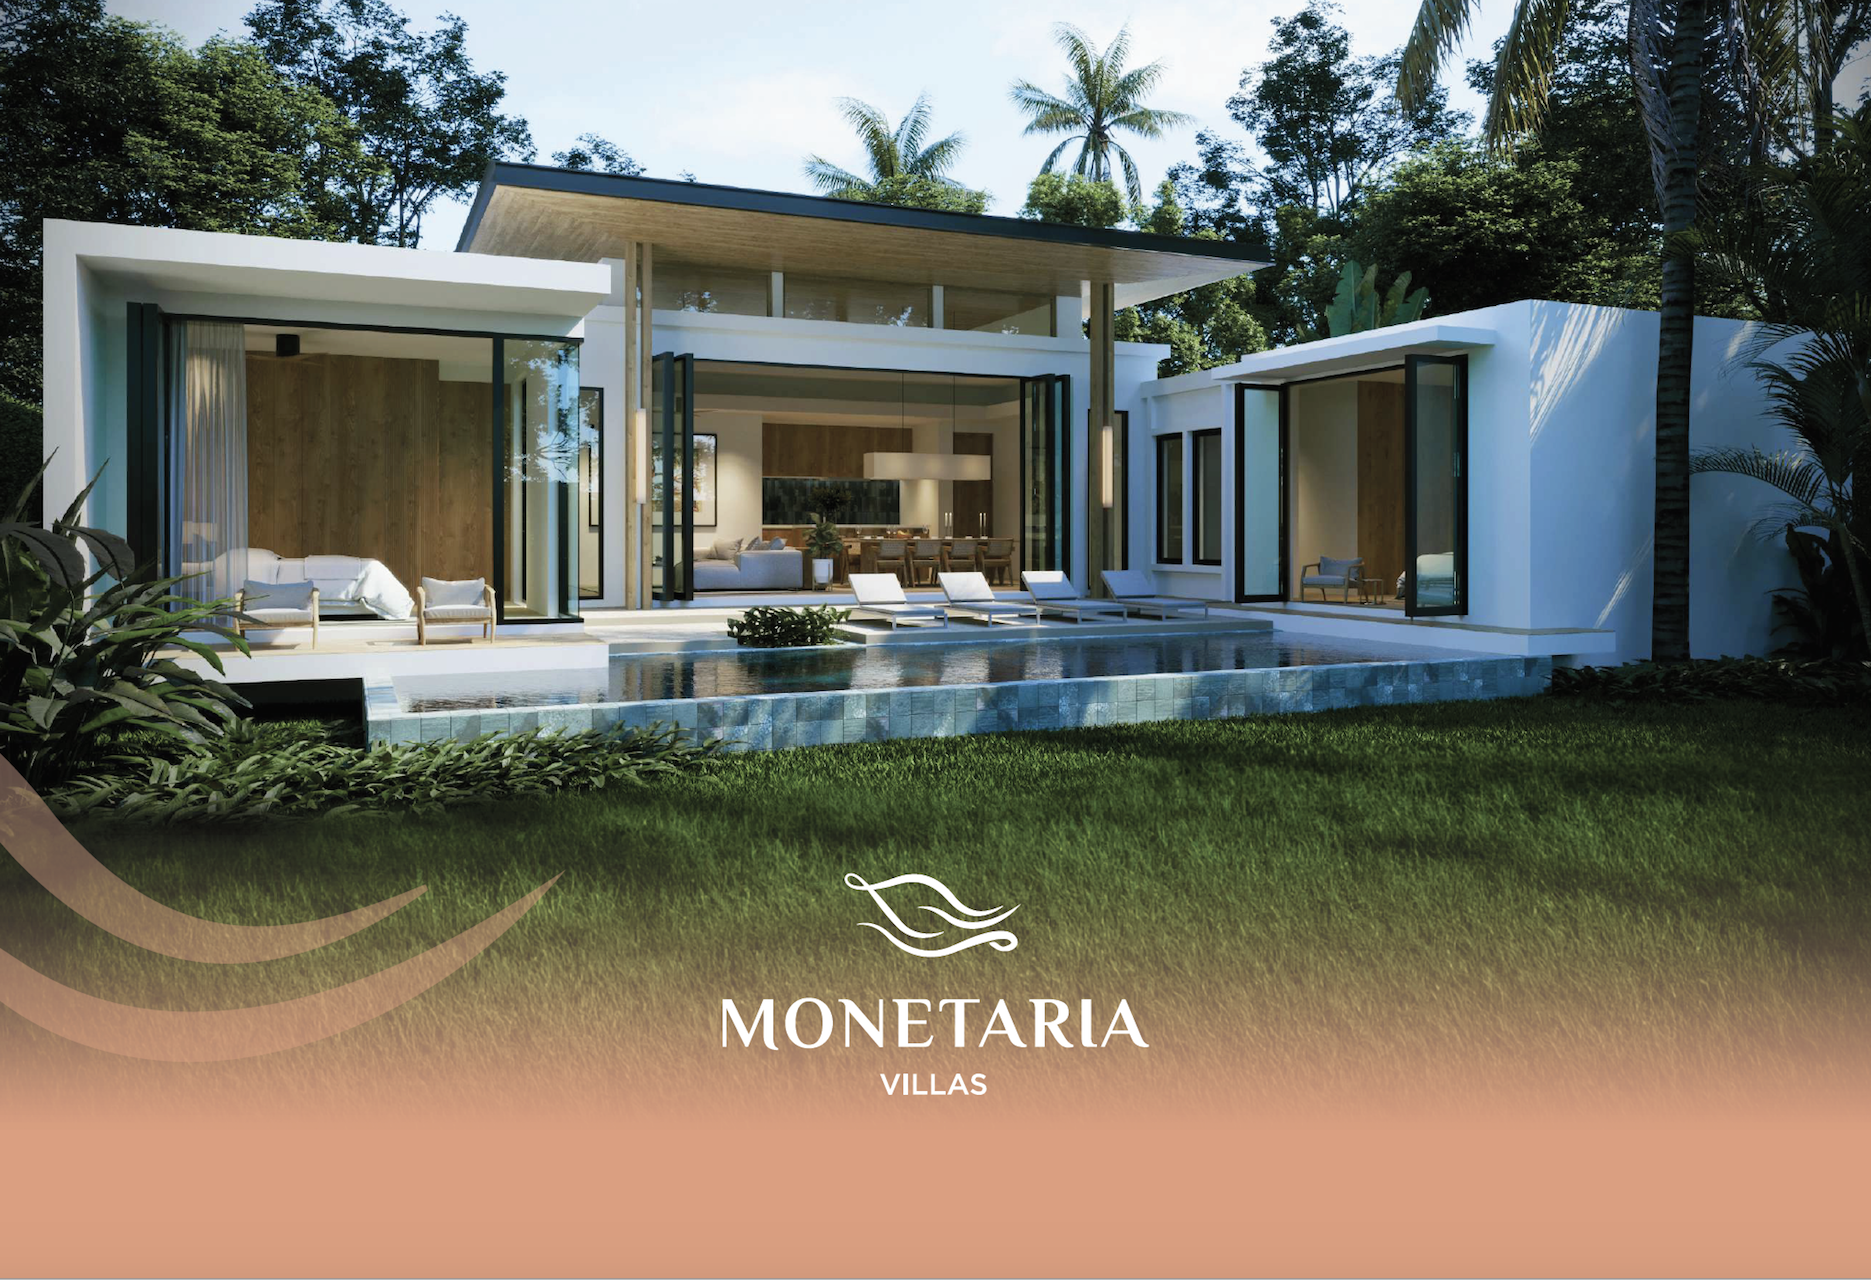 Monetaria Luxury Pool Villas